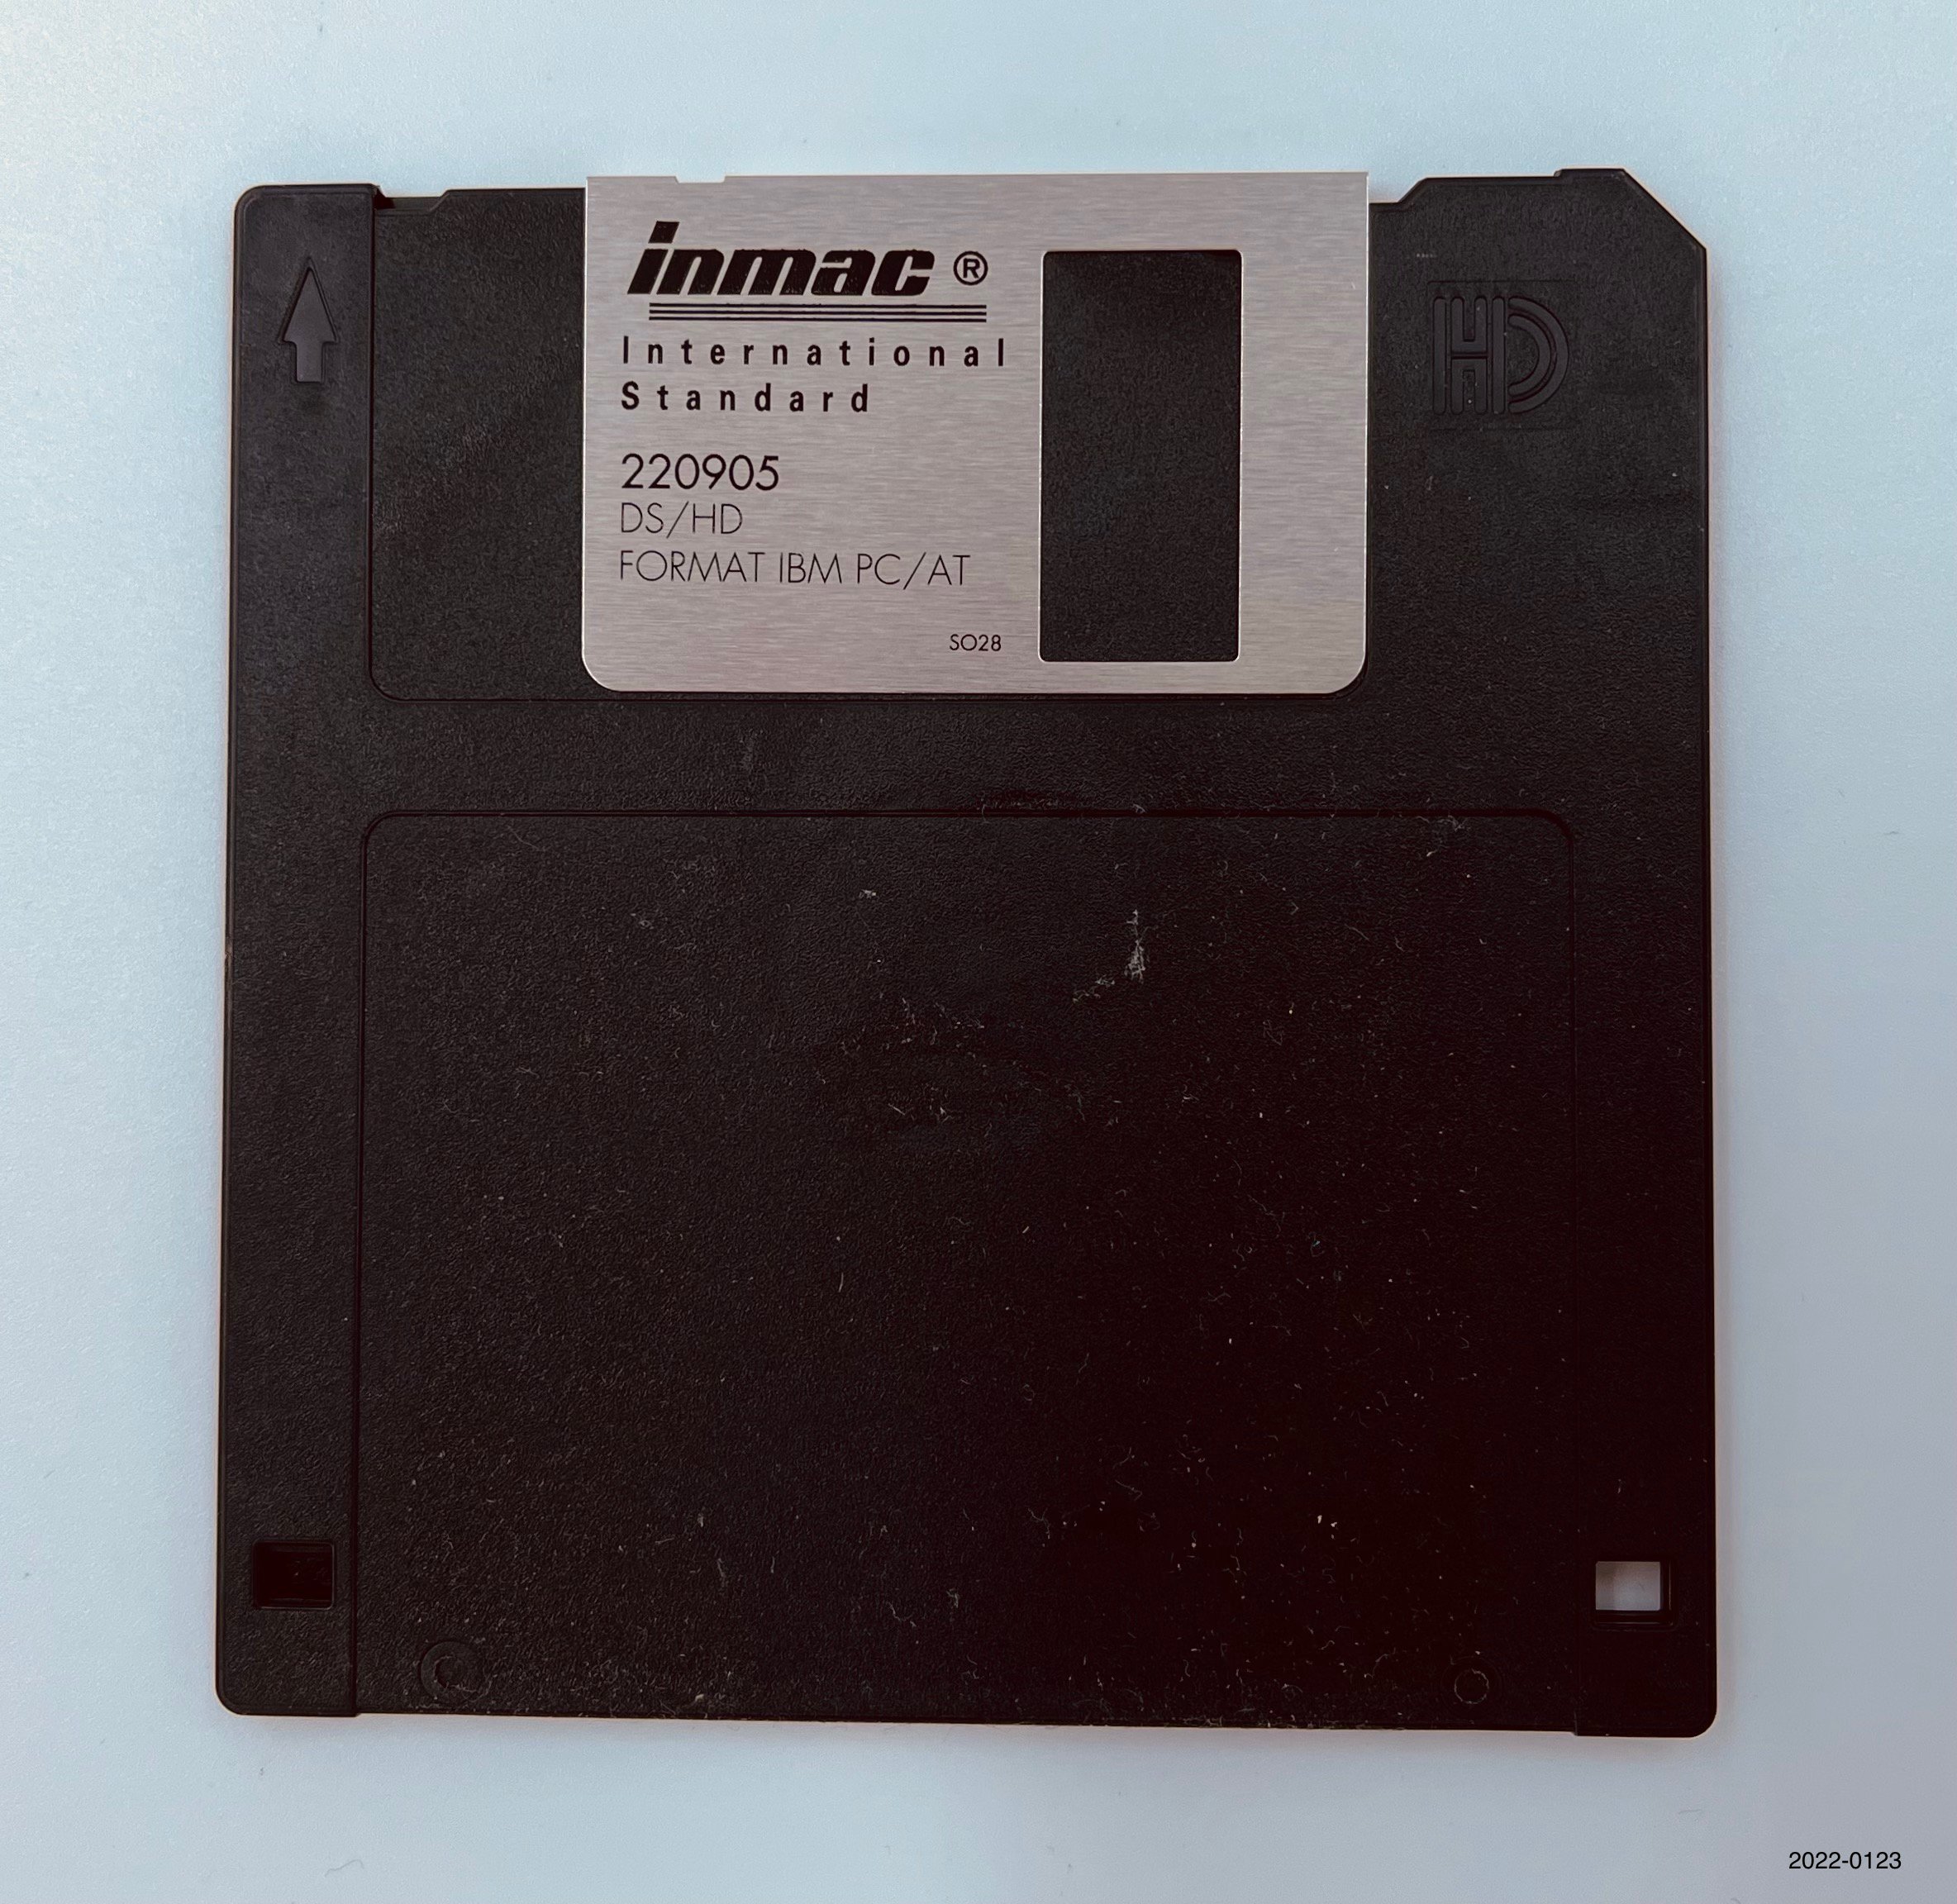 3 1/2 Zoll Diskette 1,44 MB Speicherkapazität: Vorderseite (Museumsgesellschaft Bad Dürkheim e. V. CC BY-NC-SA)